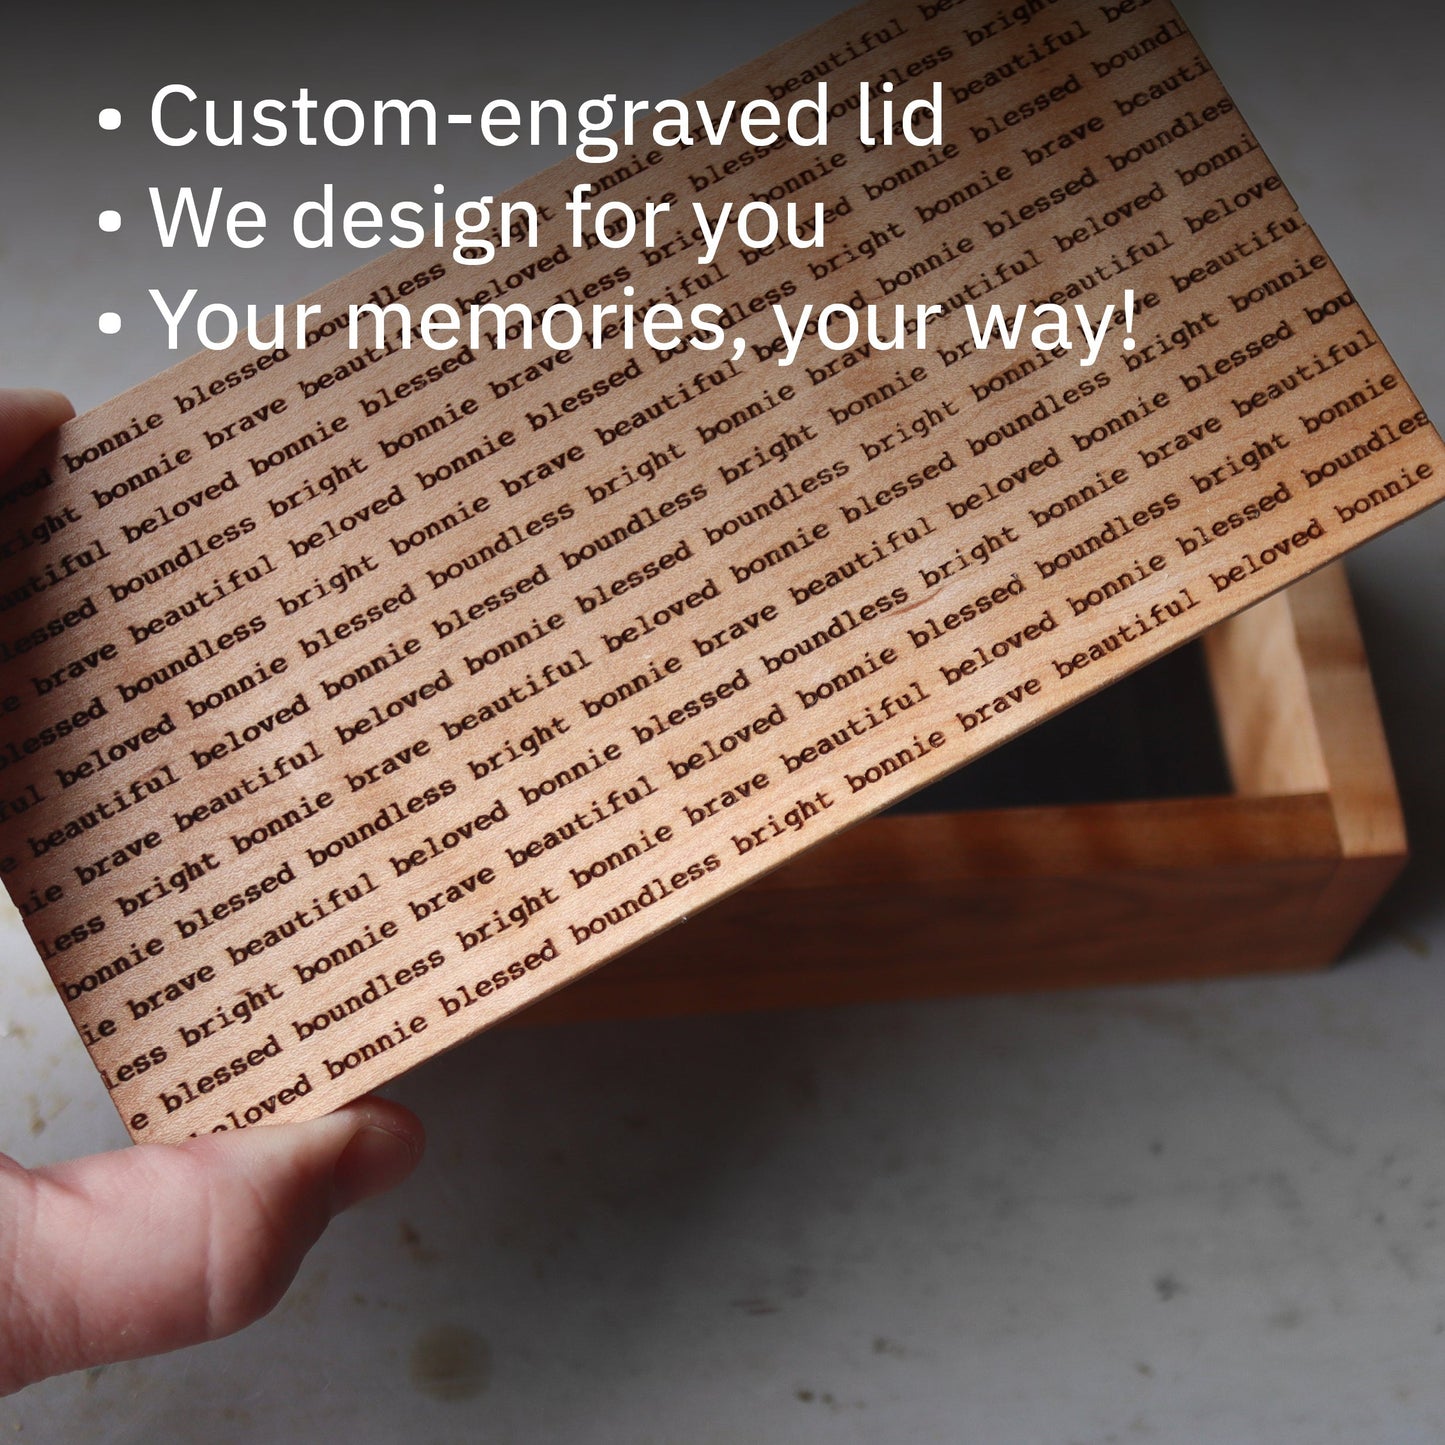 Keepsake Boxes With Custom-Engraved Lids